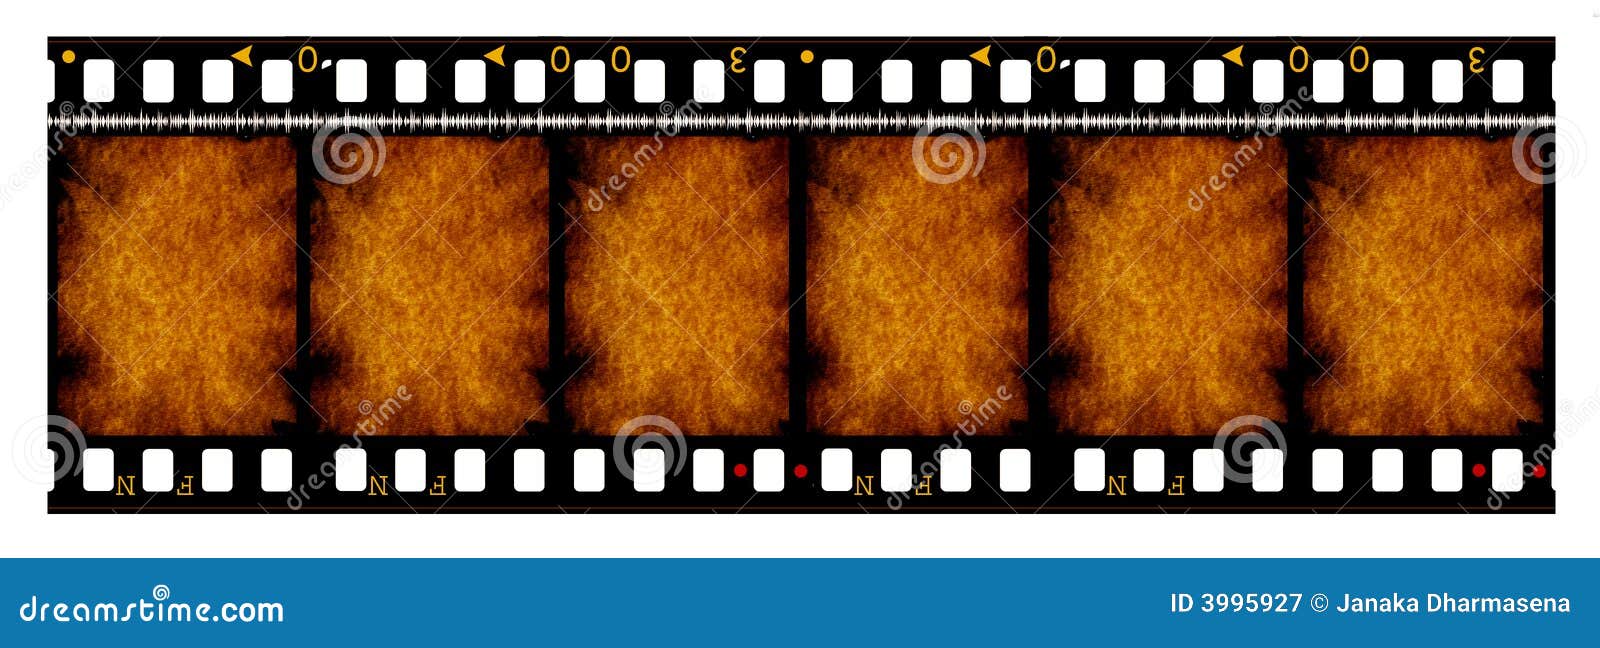 35 mm movie Film reel stock illustration. Illustration of color - 3995927